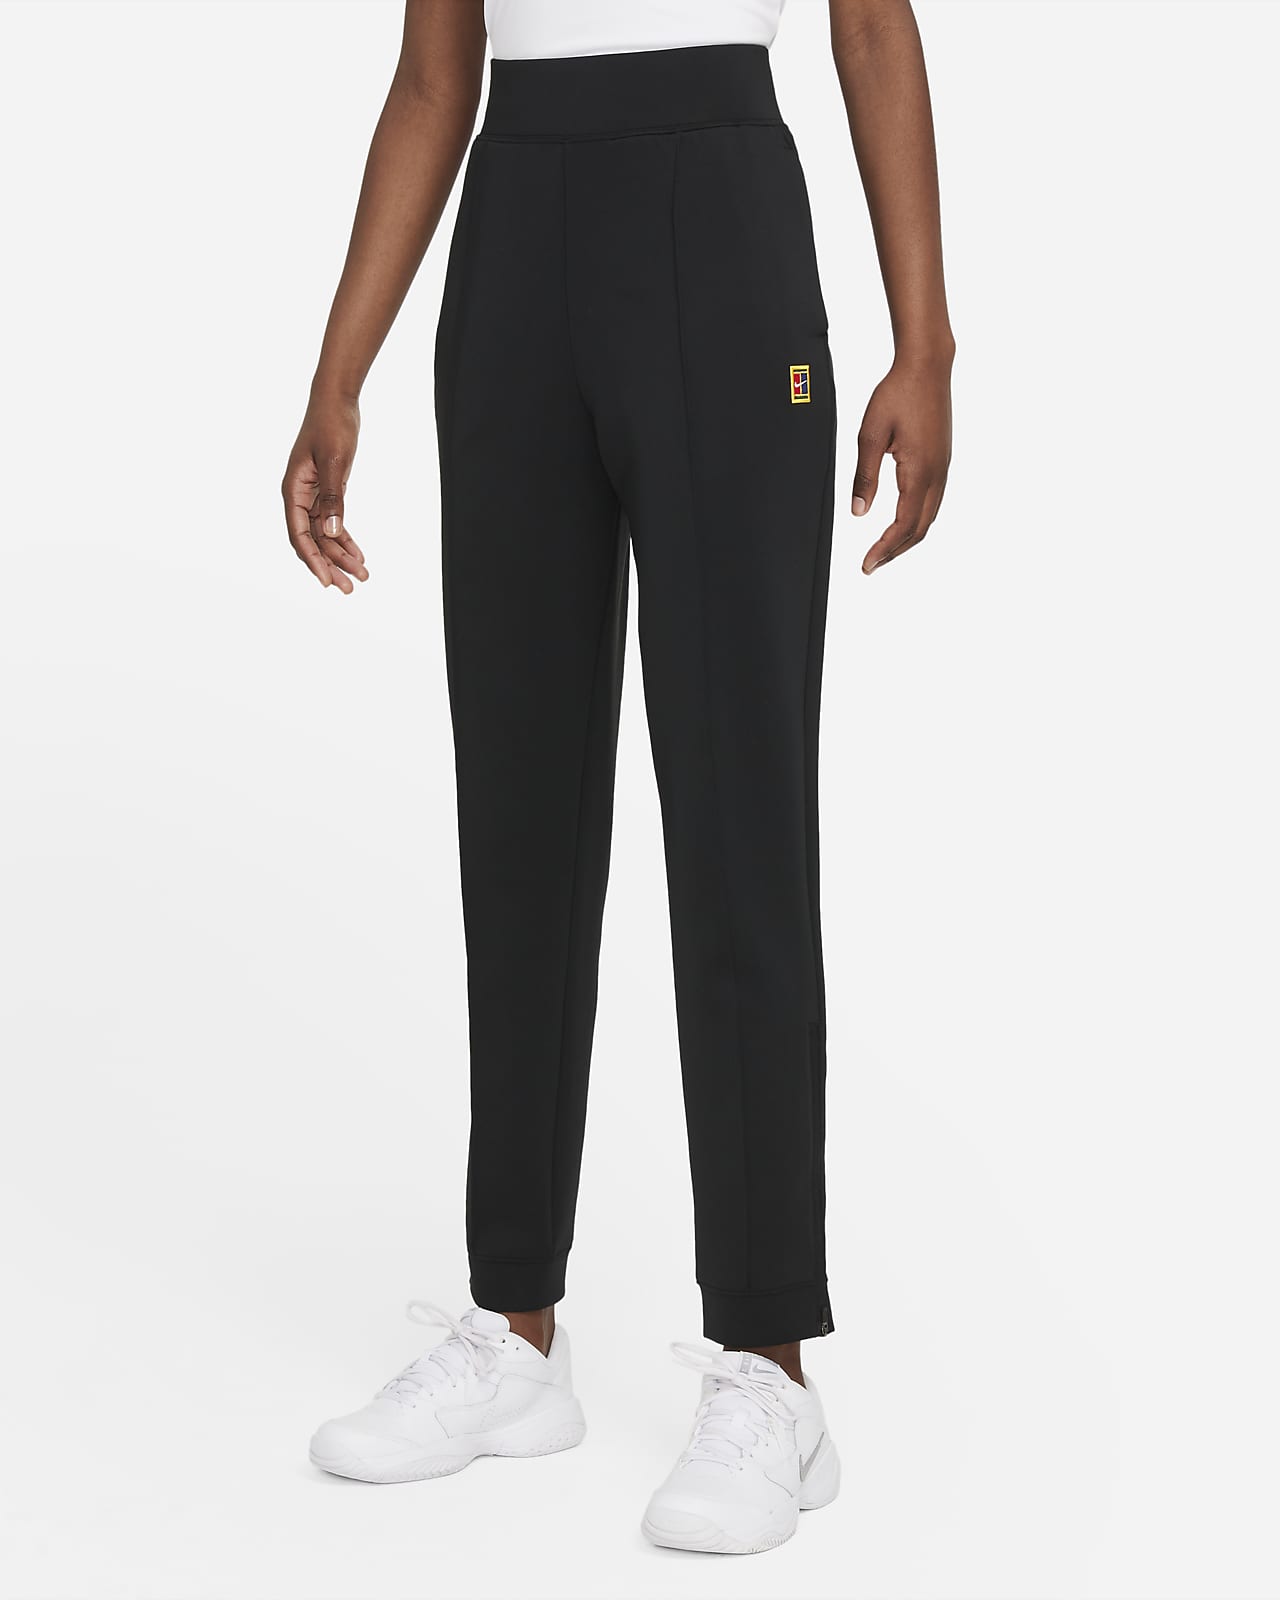 Pants tejidos de tenis para mujer NikeCourt Dri-FIT